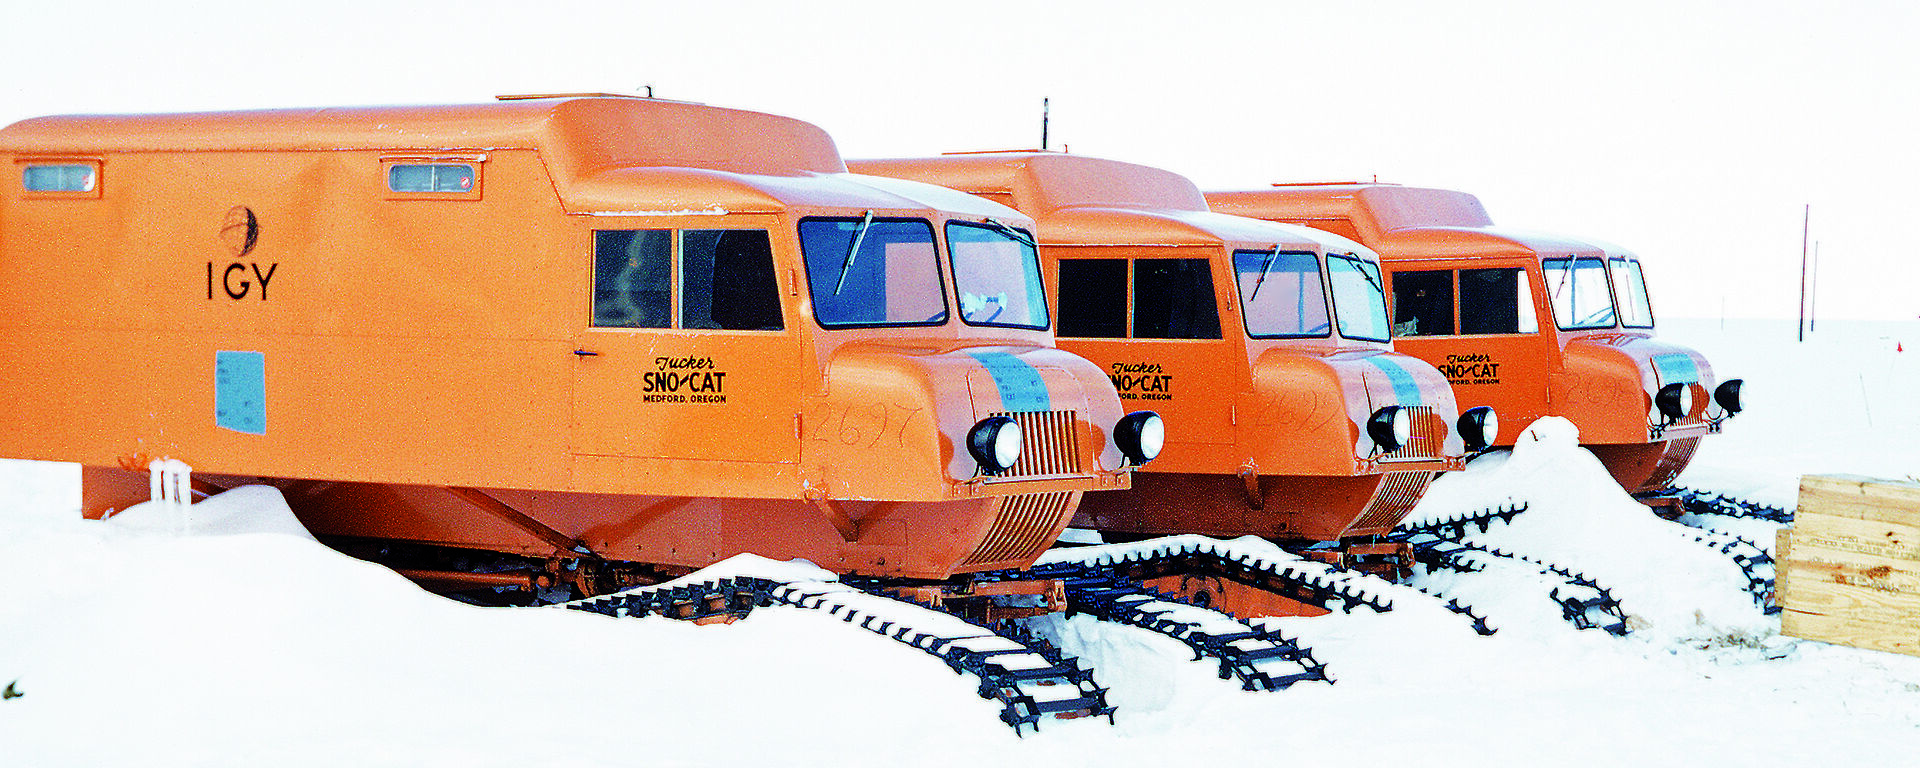 Orange oversnow vehicles in a line.